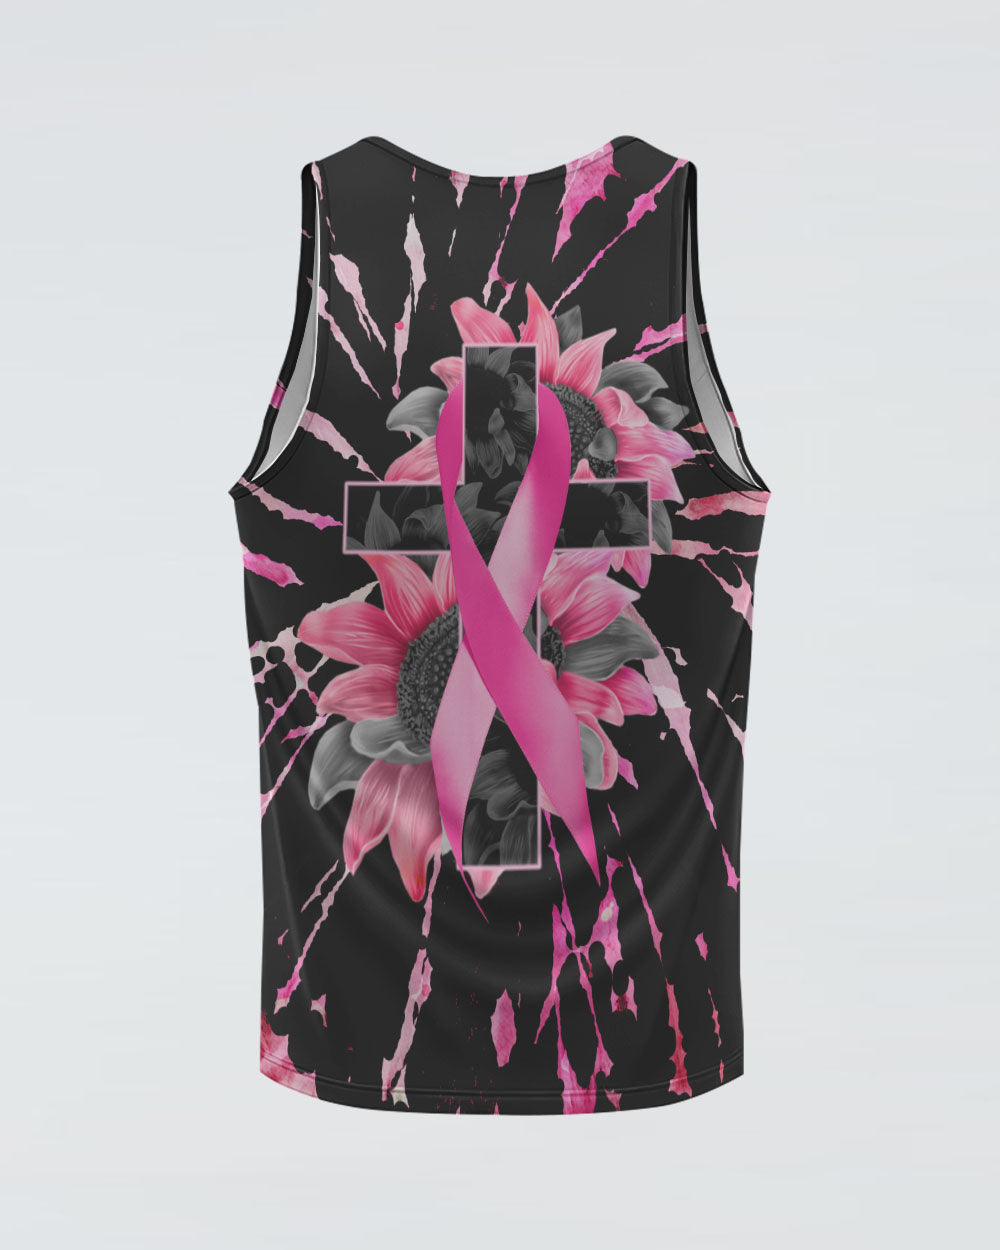 Sunflower Cross Ribbon New Tie Dye Women's Breast Cancer Awareness Tanks